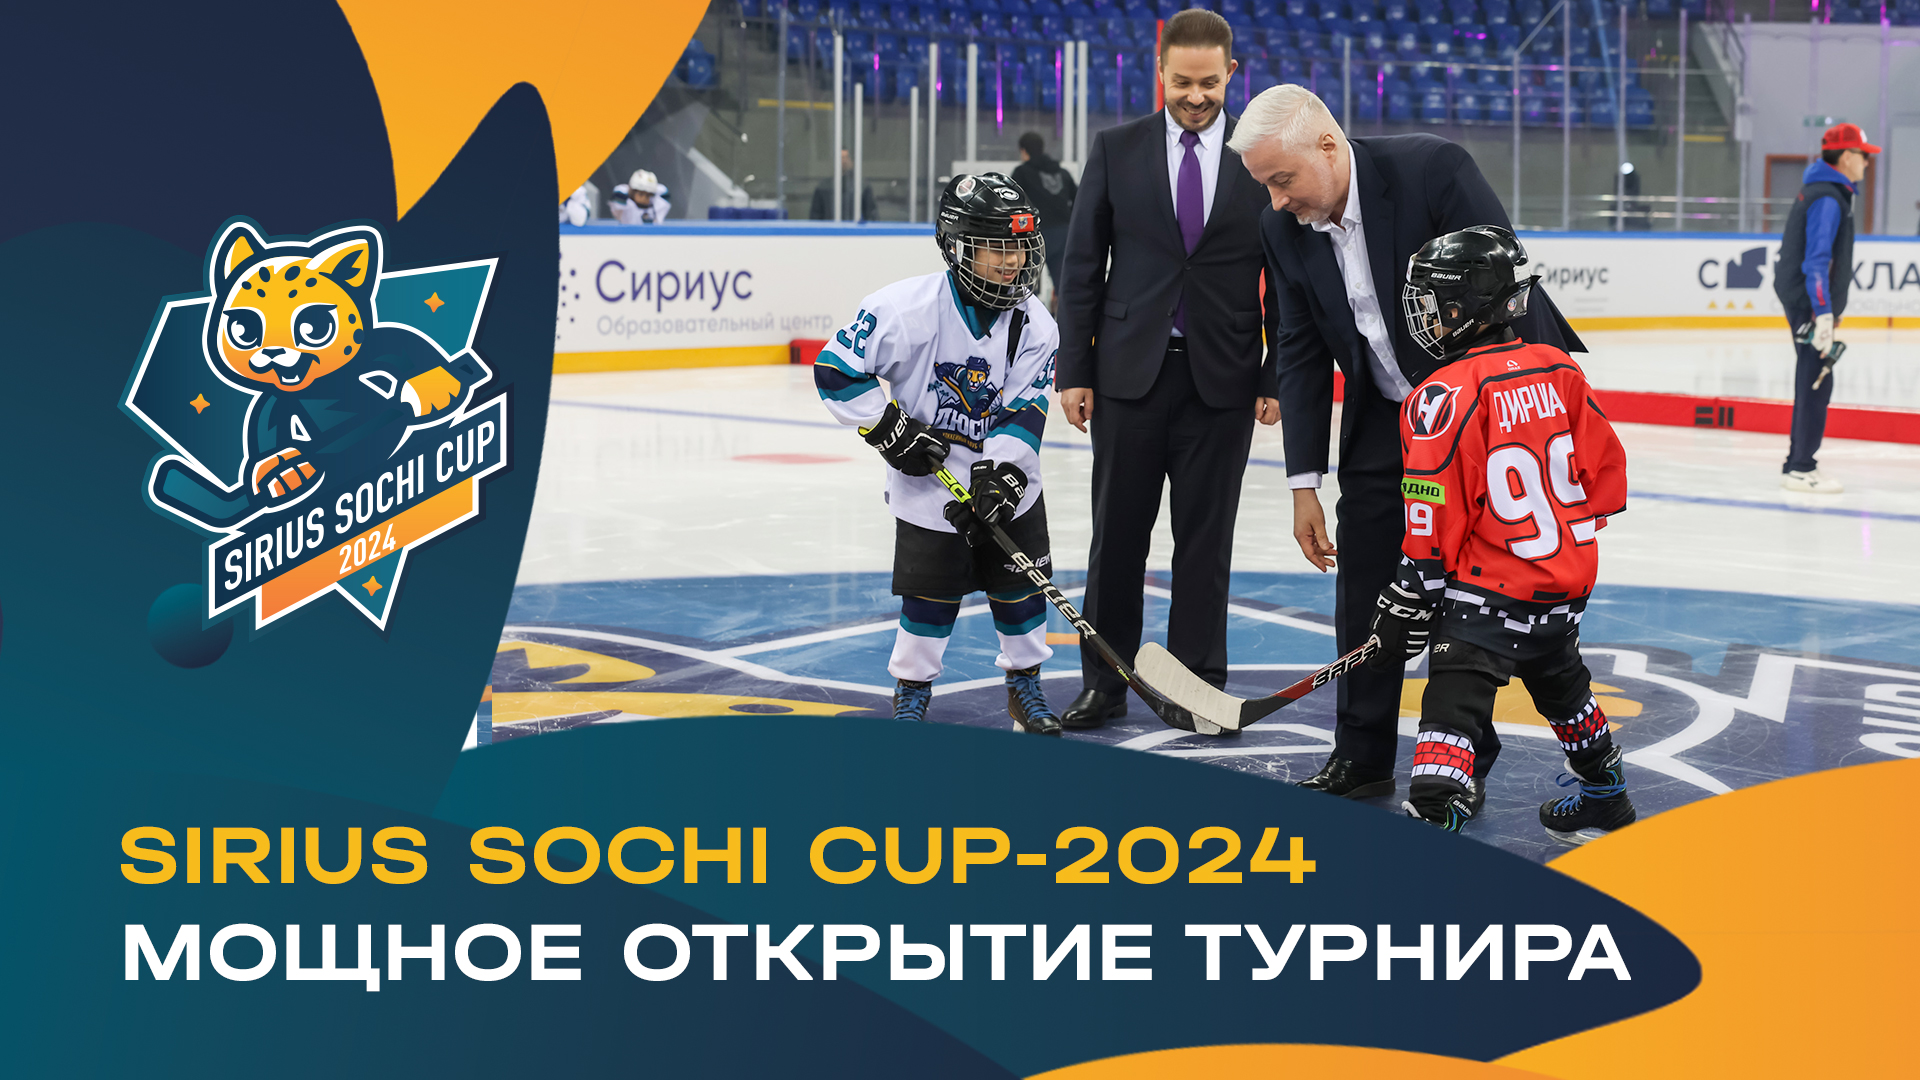 Sirius Sochi Cup-2024. Мощное открытие турнира